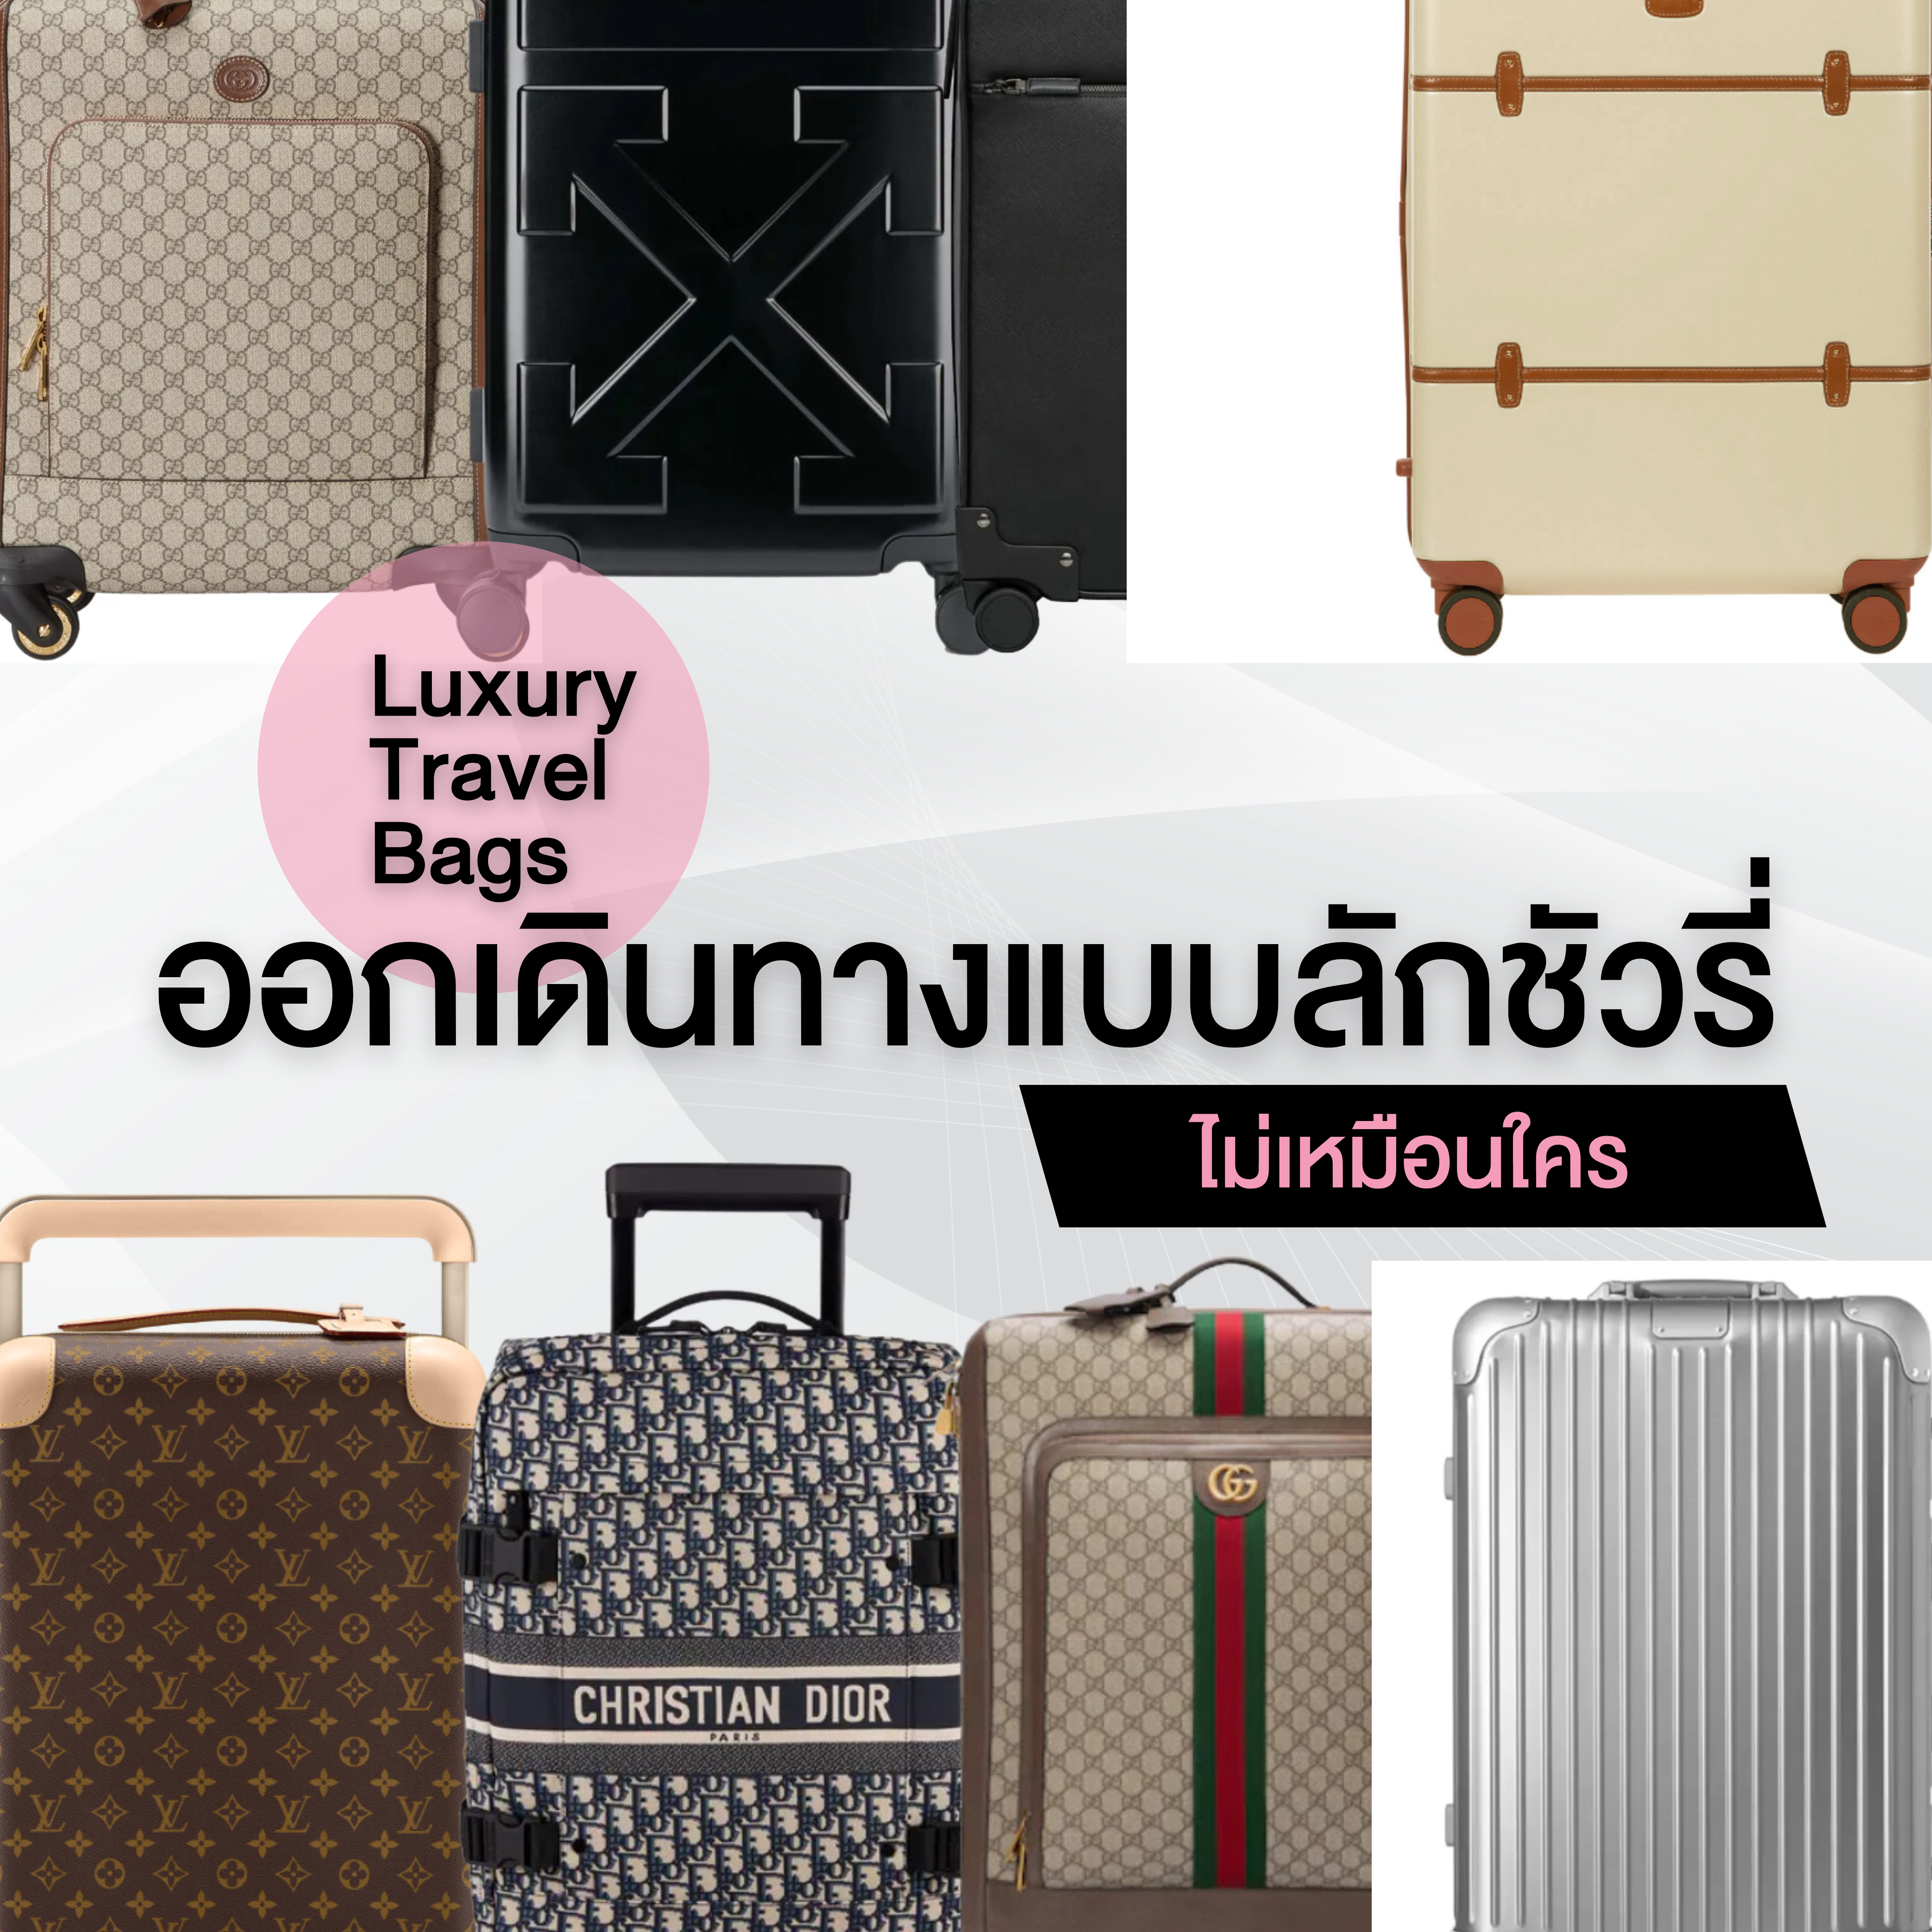 Luxury Travel Bags ออกเดินทางแบบลักชัวรี่ไม่เหมือนใคร